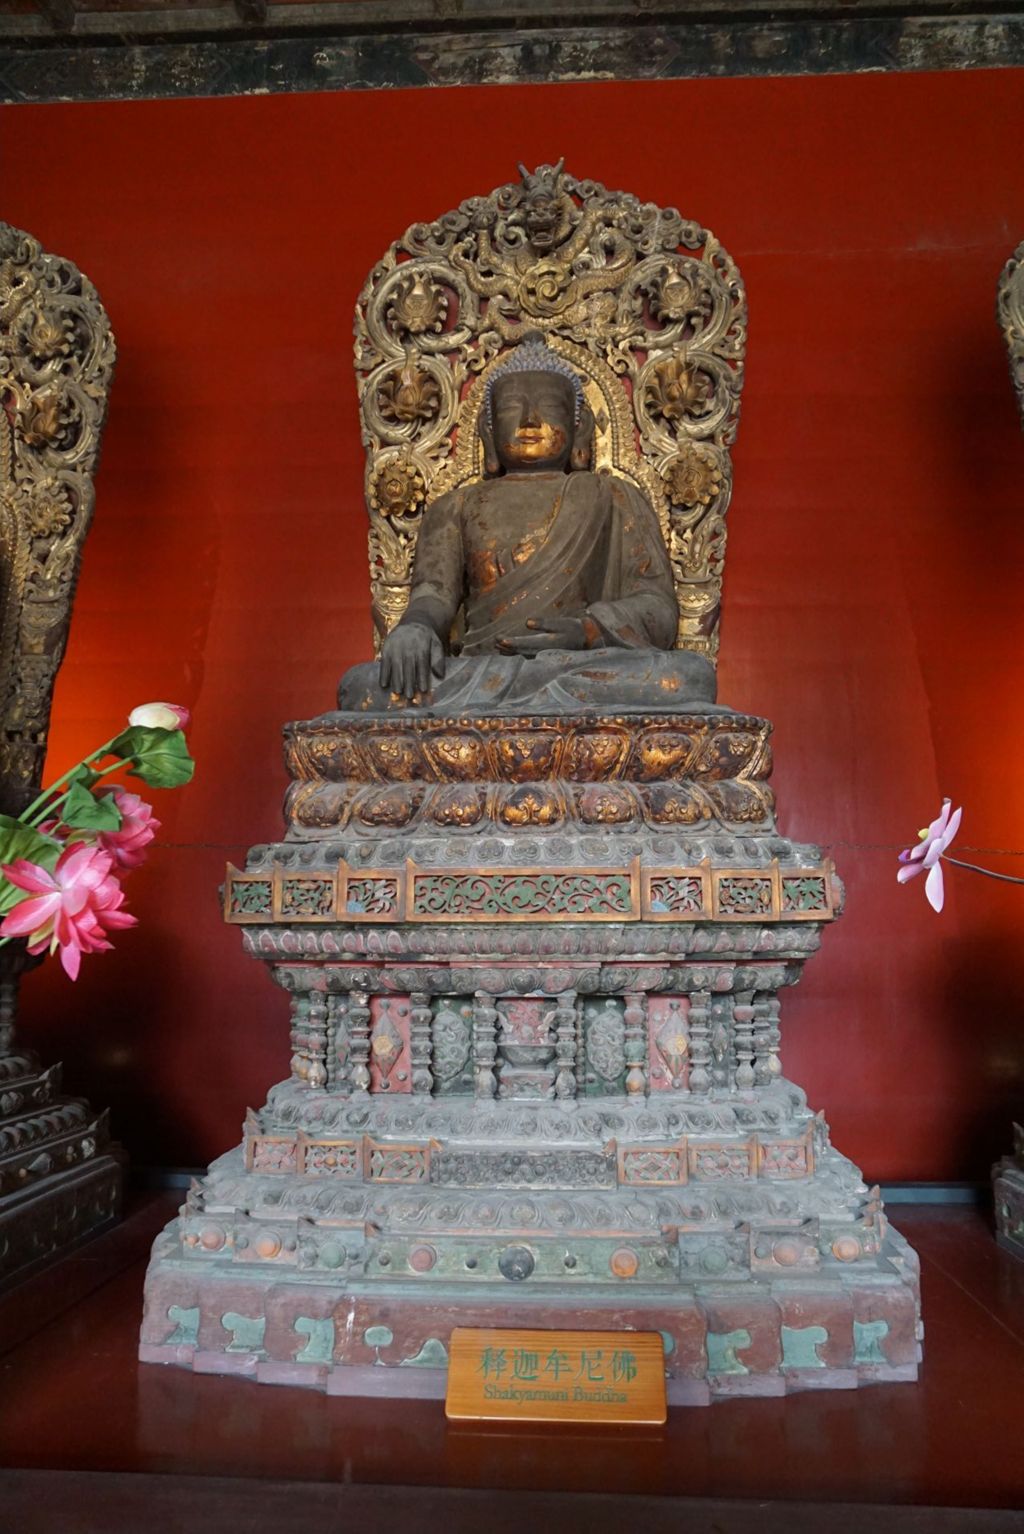 Miniature of Buddha Triad from Zhihua Hall (Zhihuadian, Hall of Transforming Wisdom), Shakyamuni (the central historical Buddha)